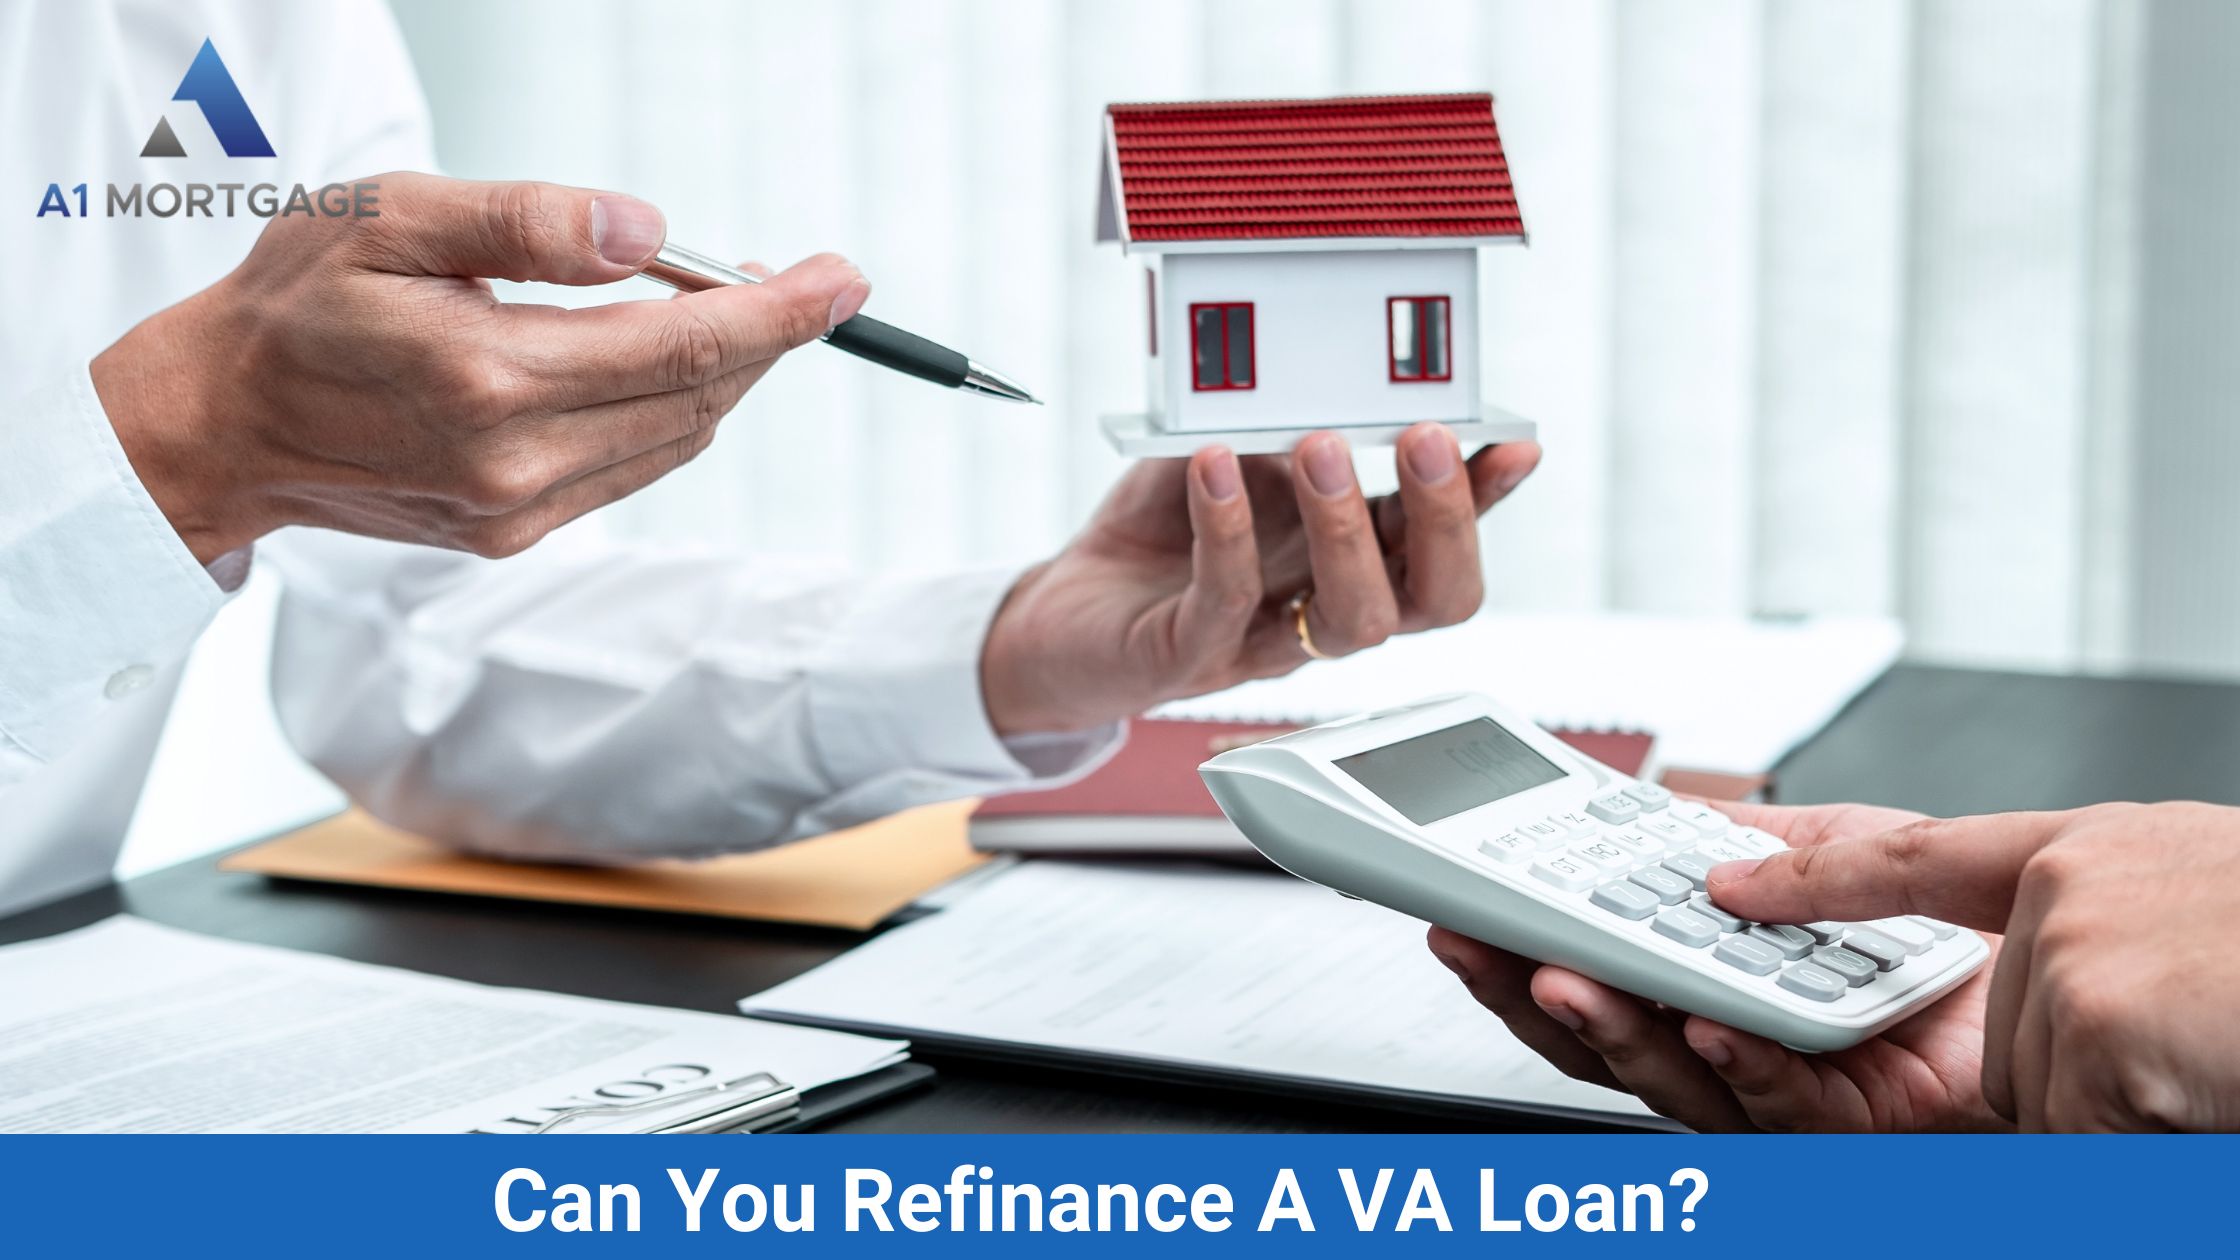 Can You Refinance A VA Loan?